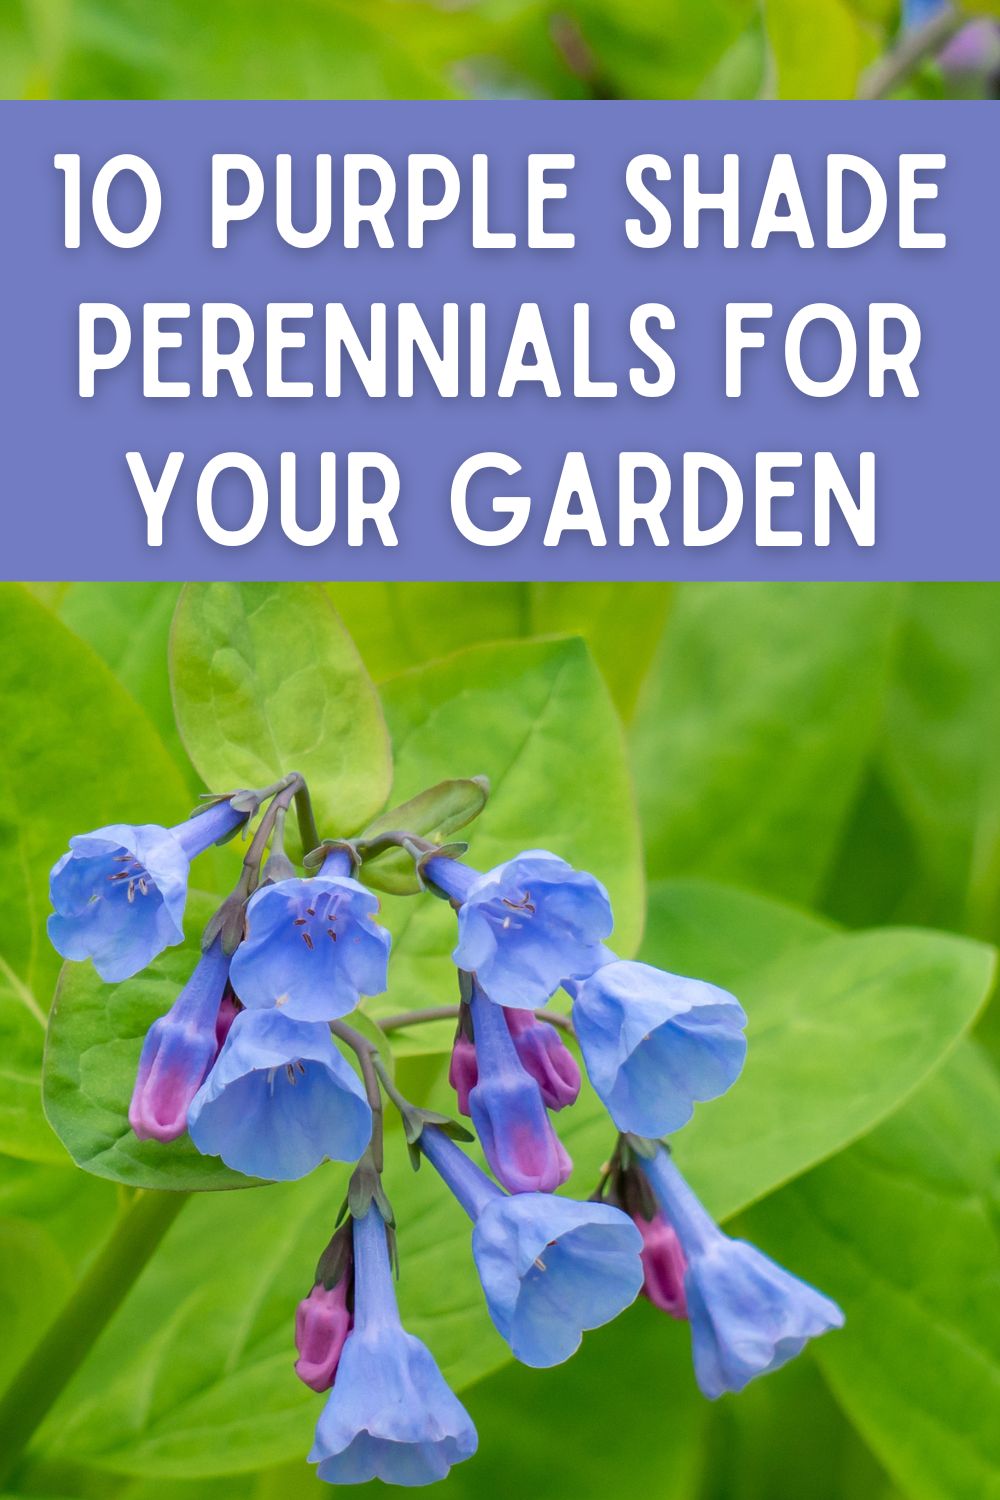 10 purple shade perennials for your garden